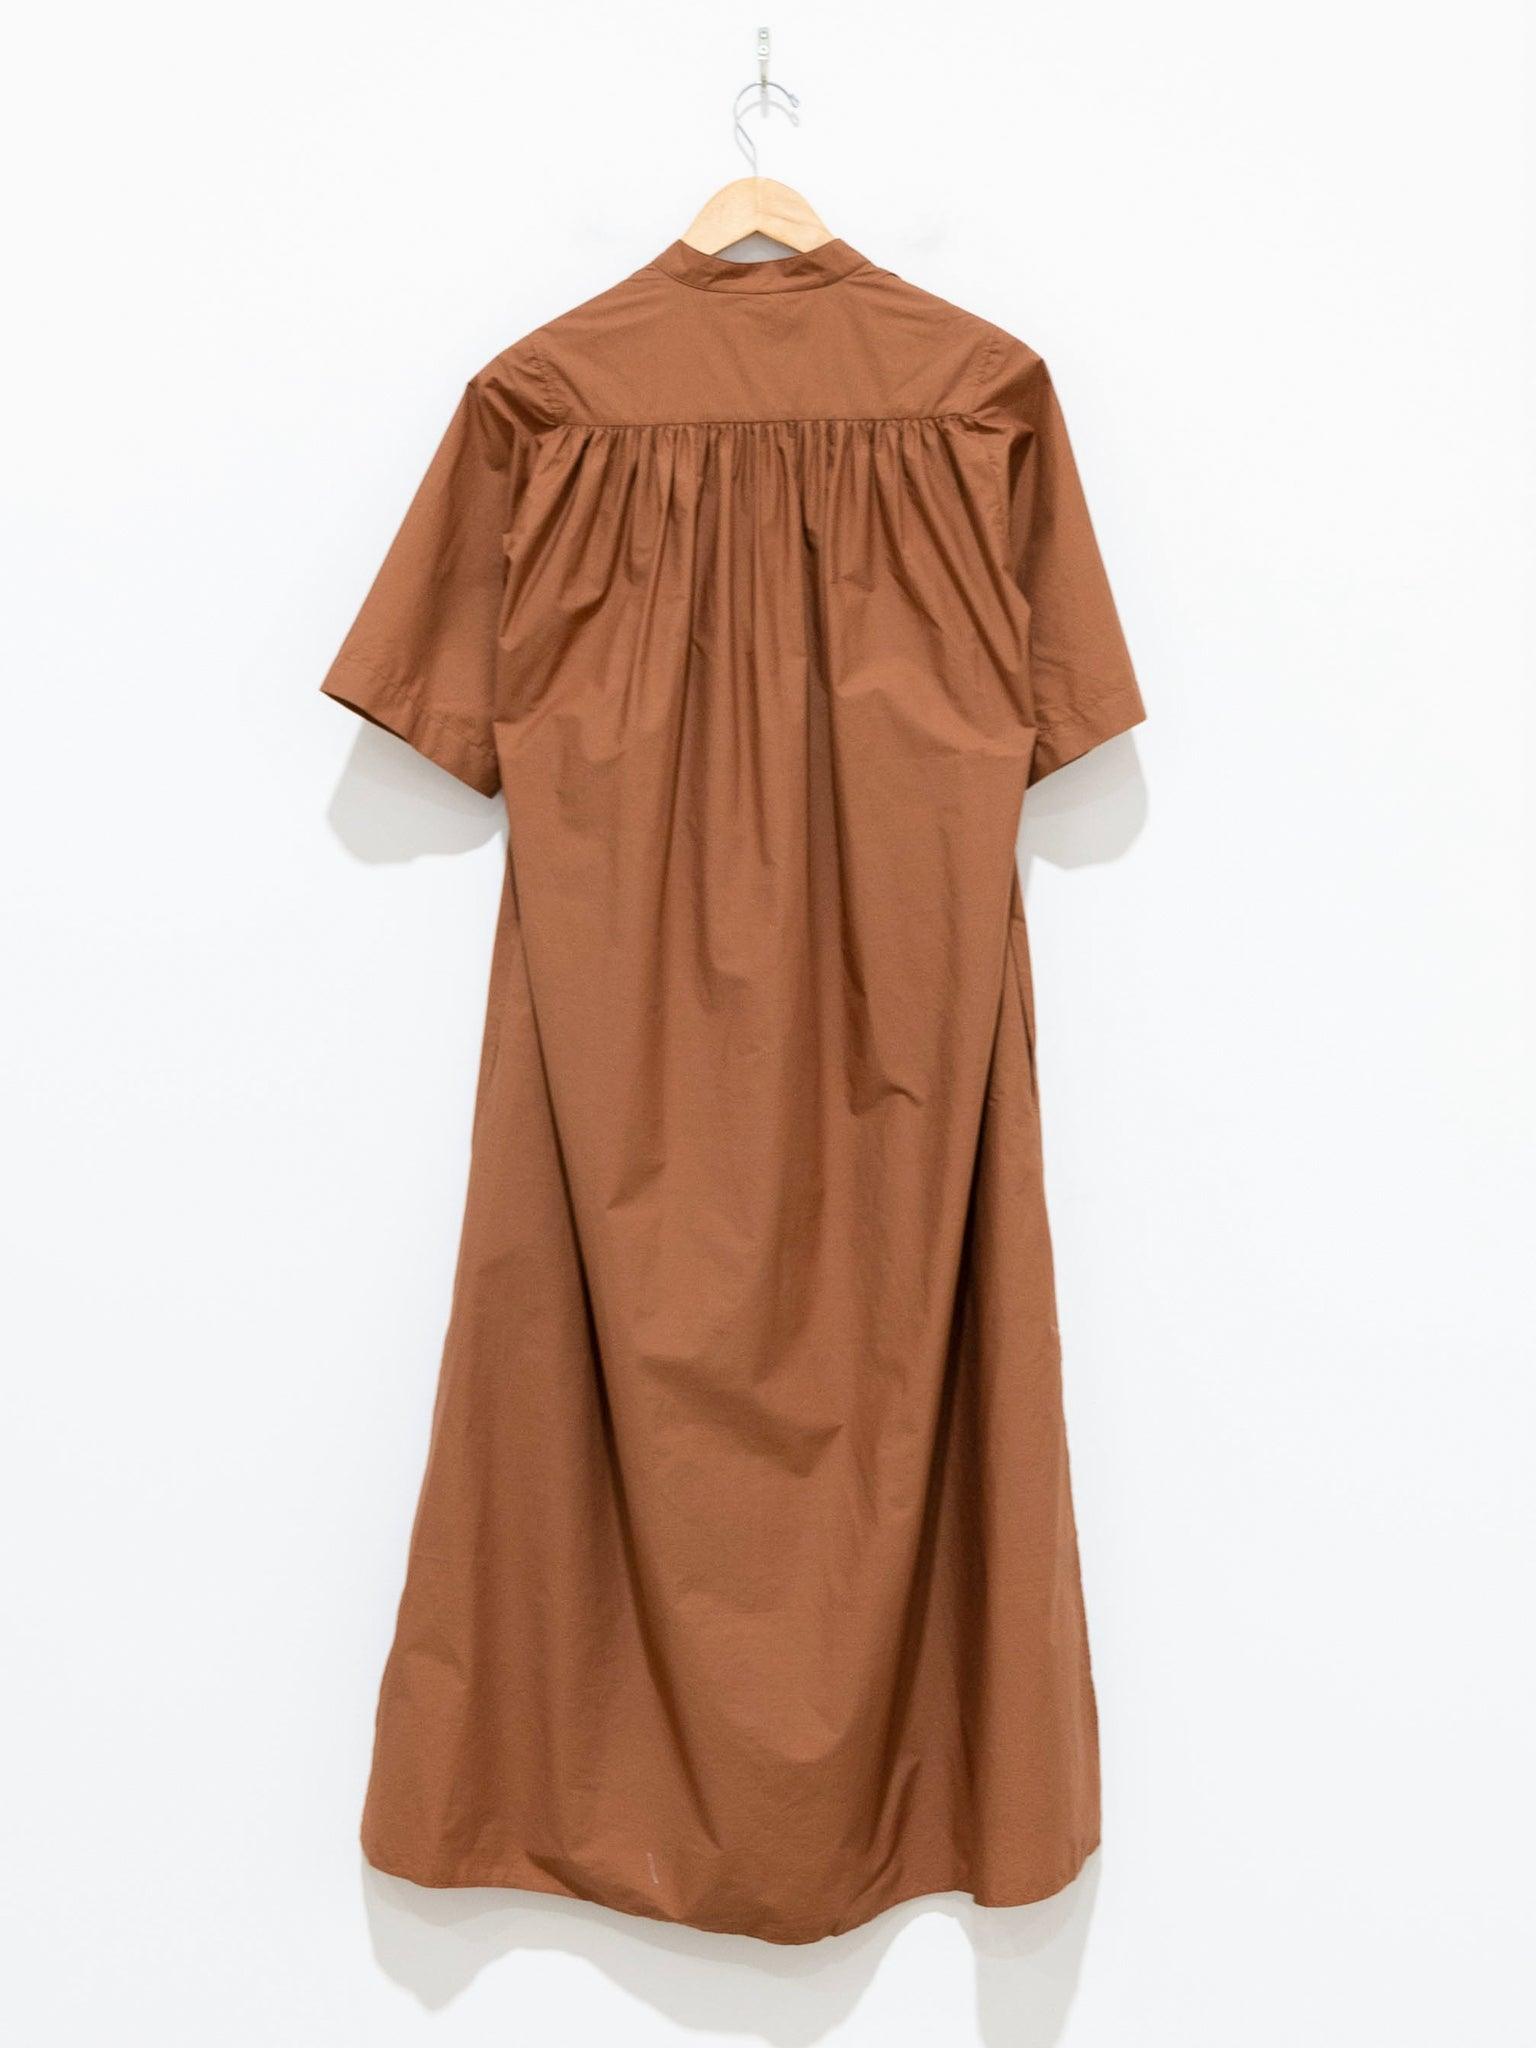 Namu Shop - Studio Nicholson Yano Dress - Tropical Dress